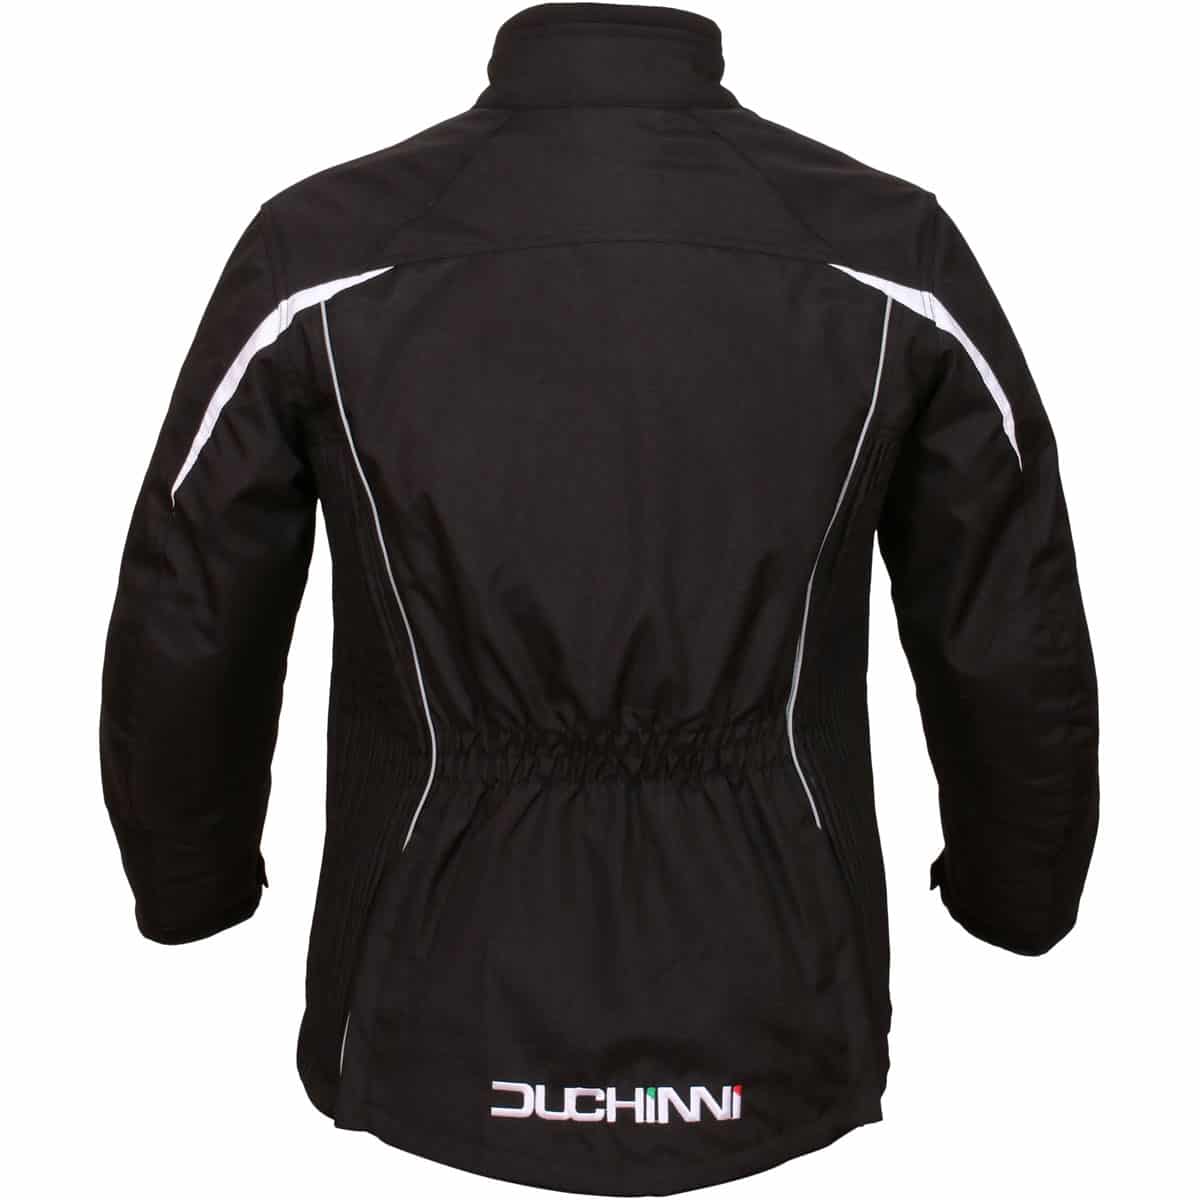 Duchinni Vienna Jacket Ladies WP jacket back